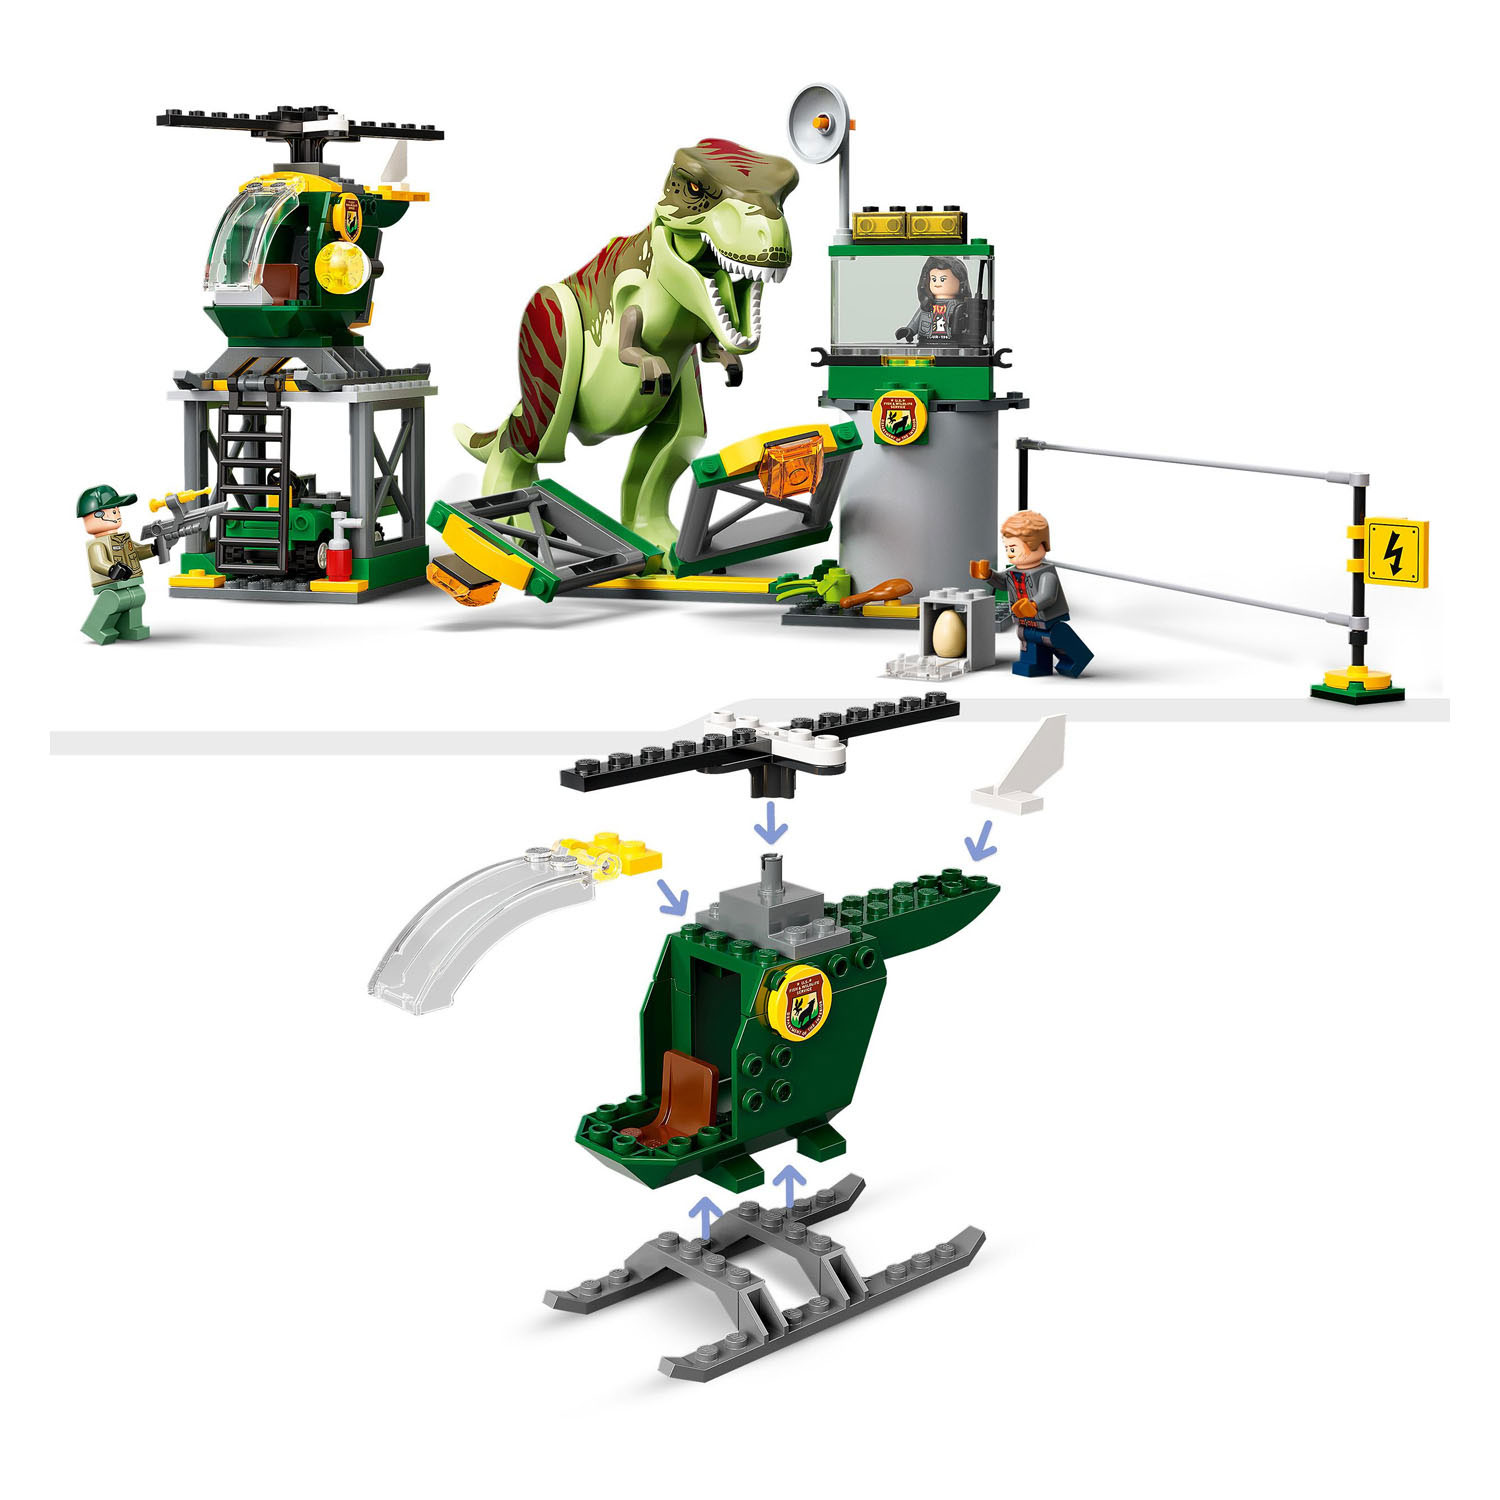 LEGO Jurassic 76944 T-Rex-Dinosaurier-Flucht